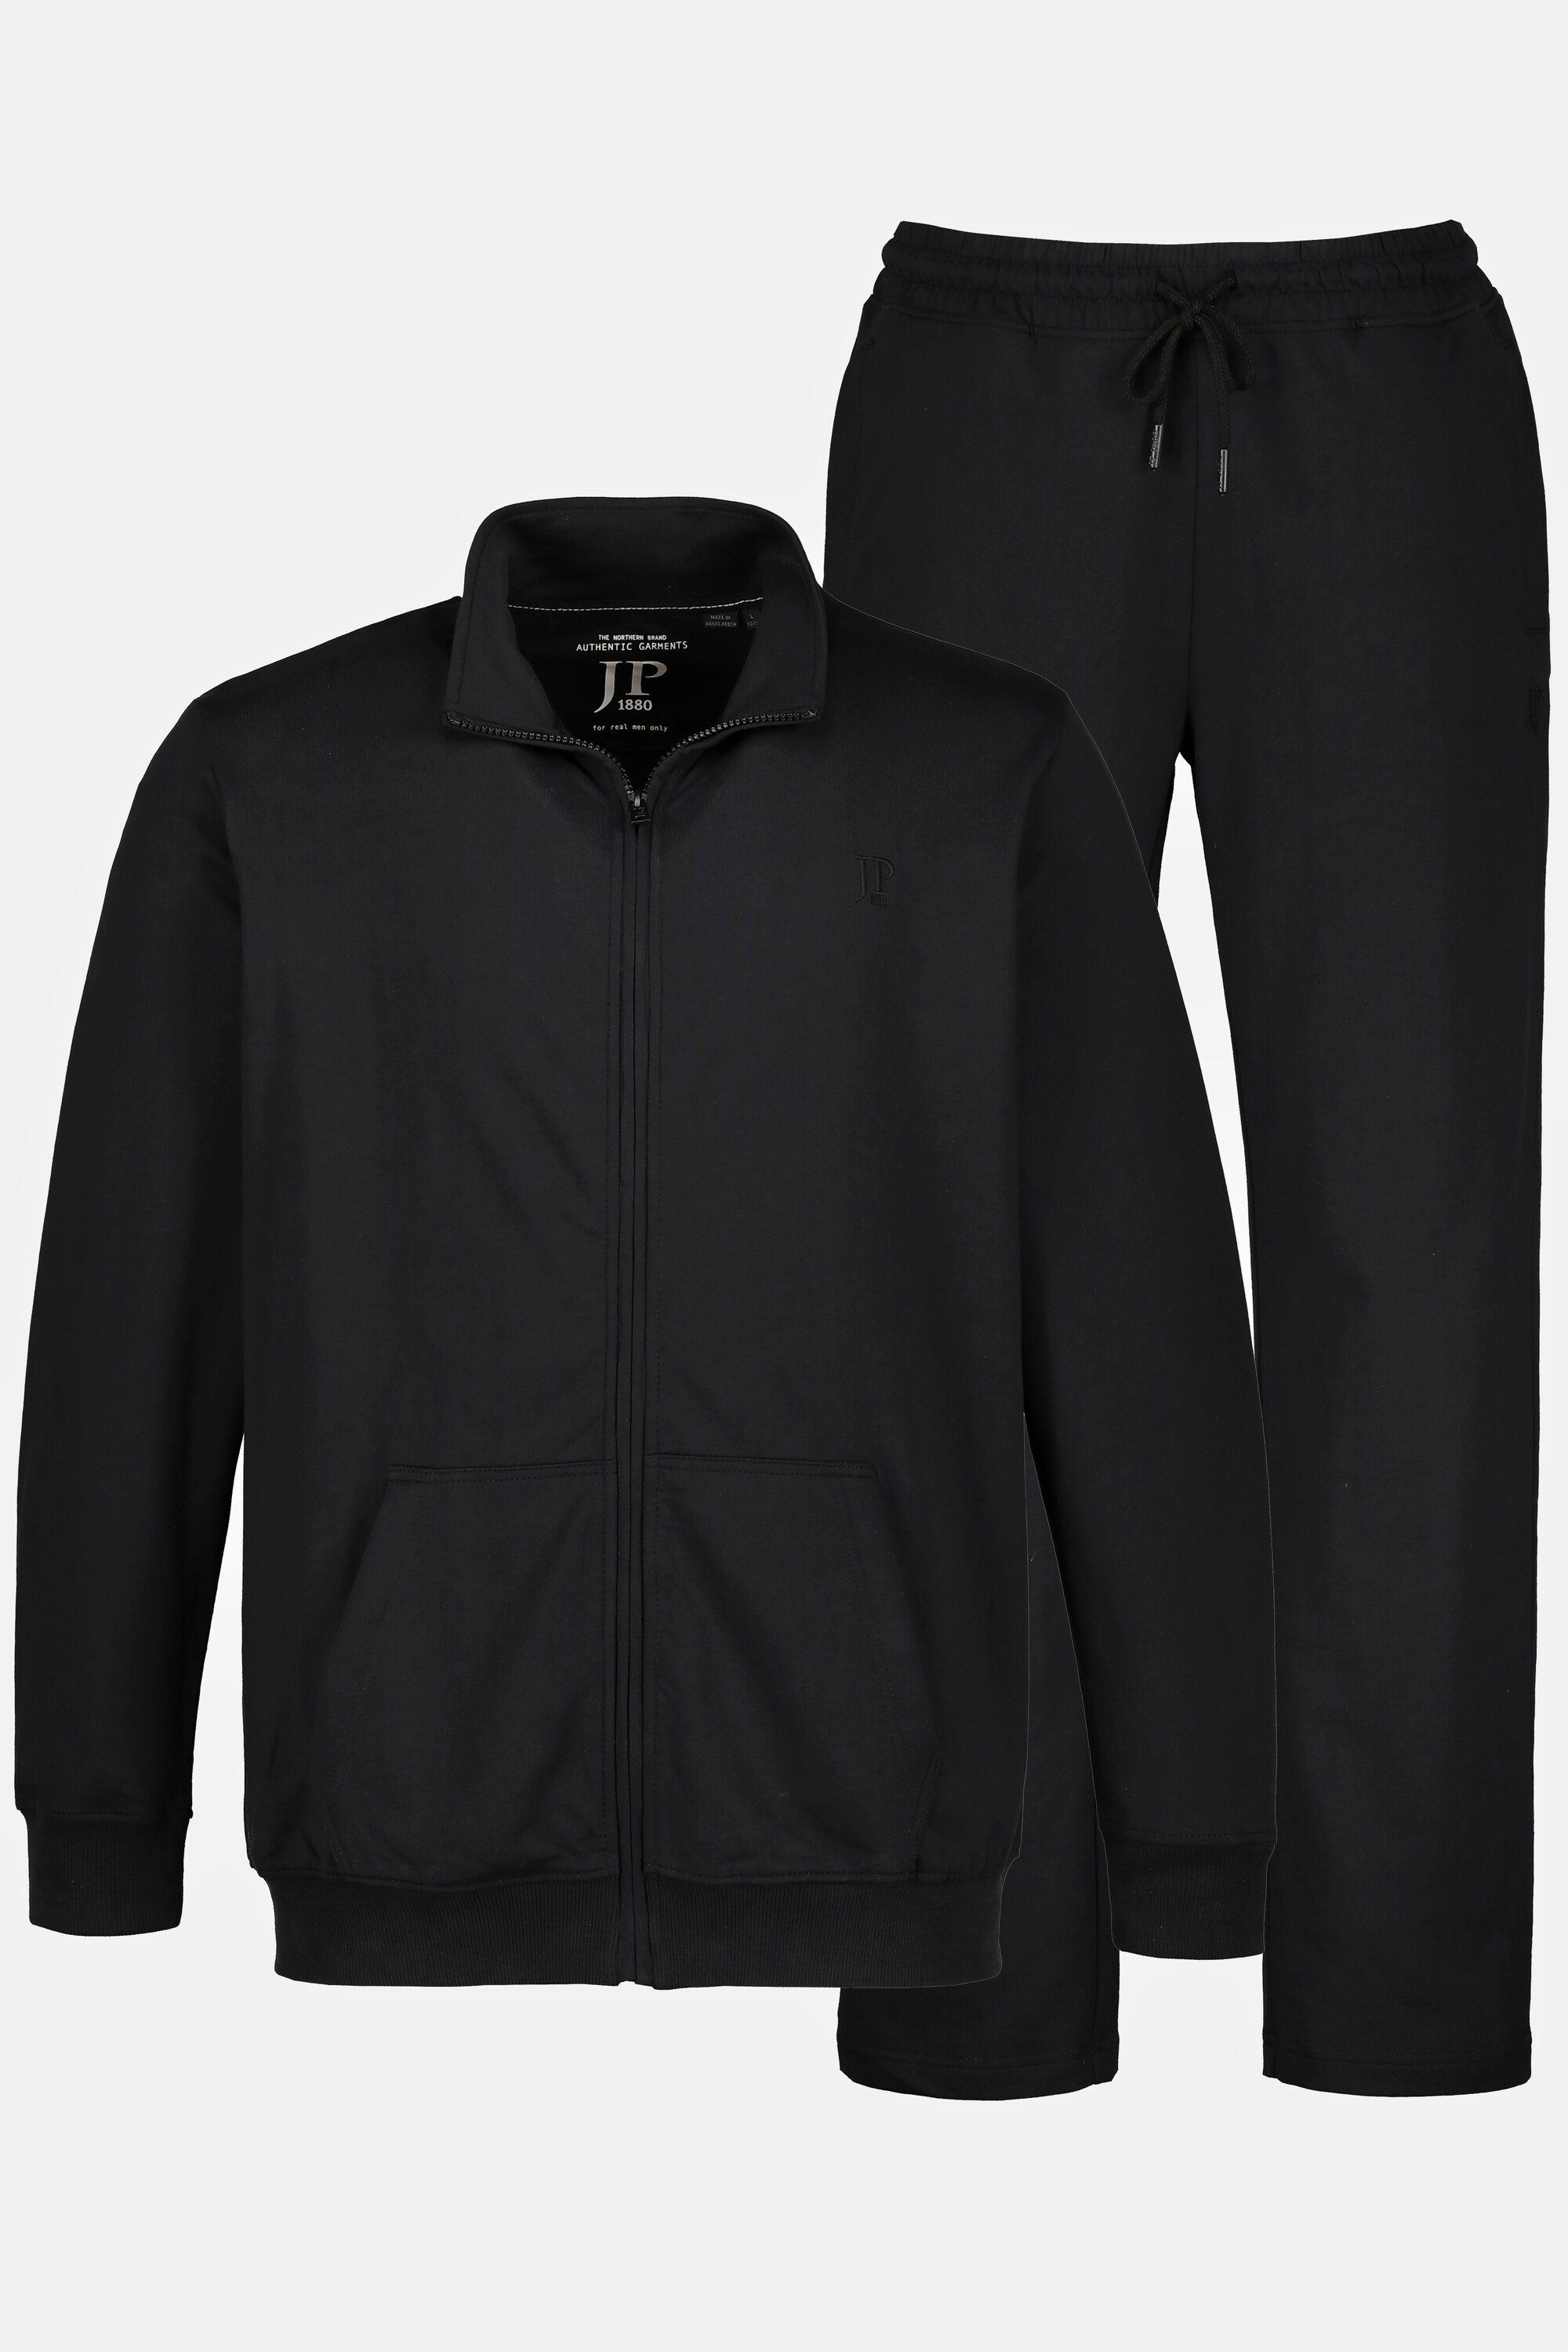 JP1880 Fleecejacke Jogginganzug 2-teilig Homewear Hose und Jacke schwarz